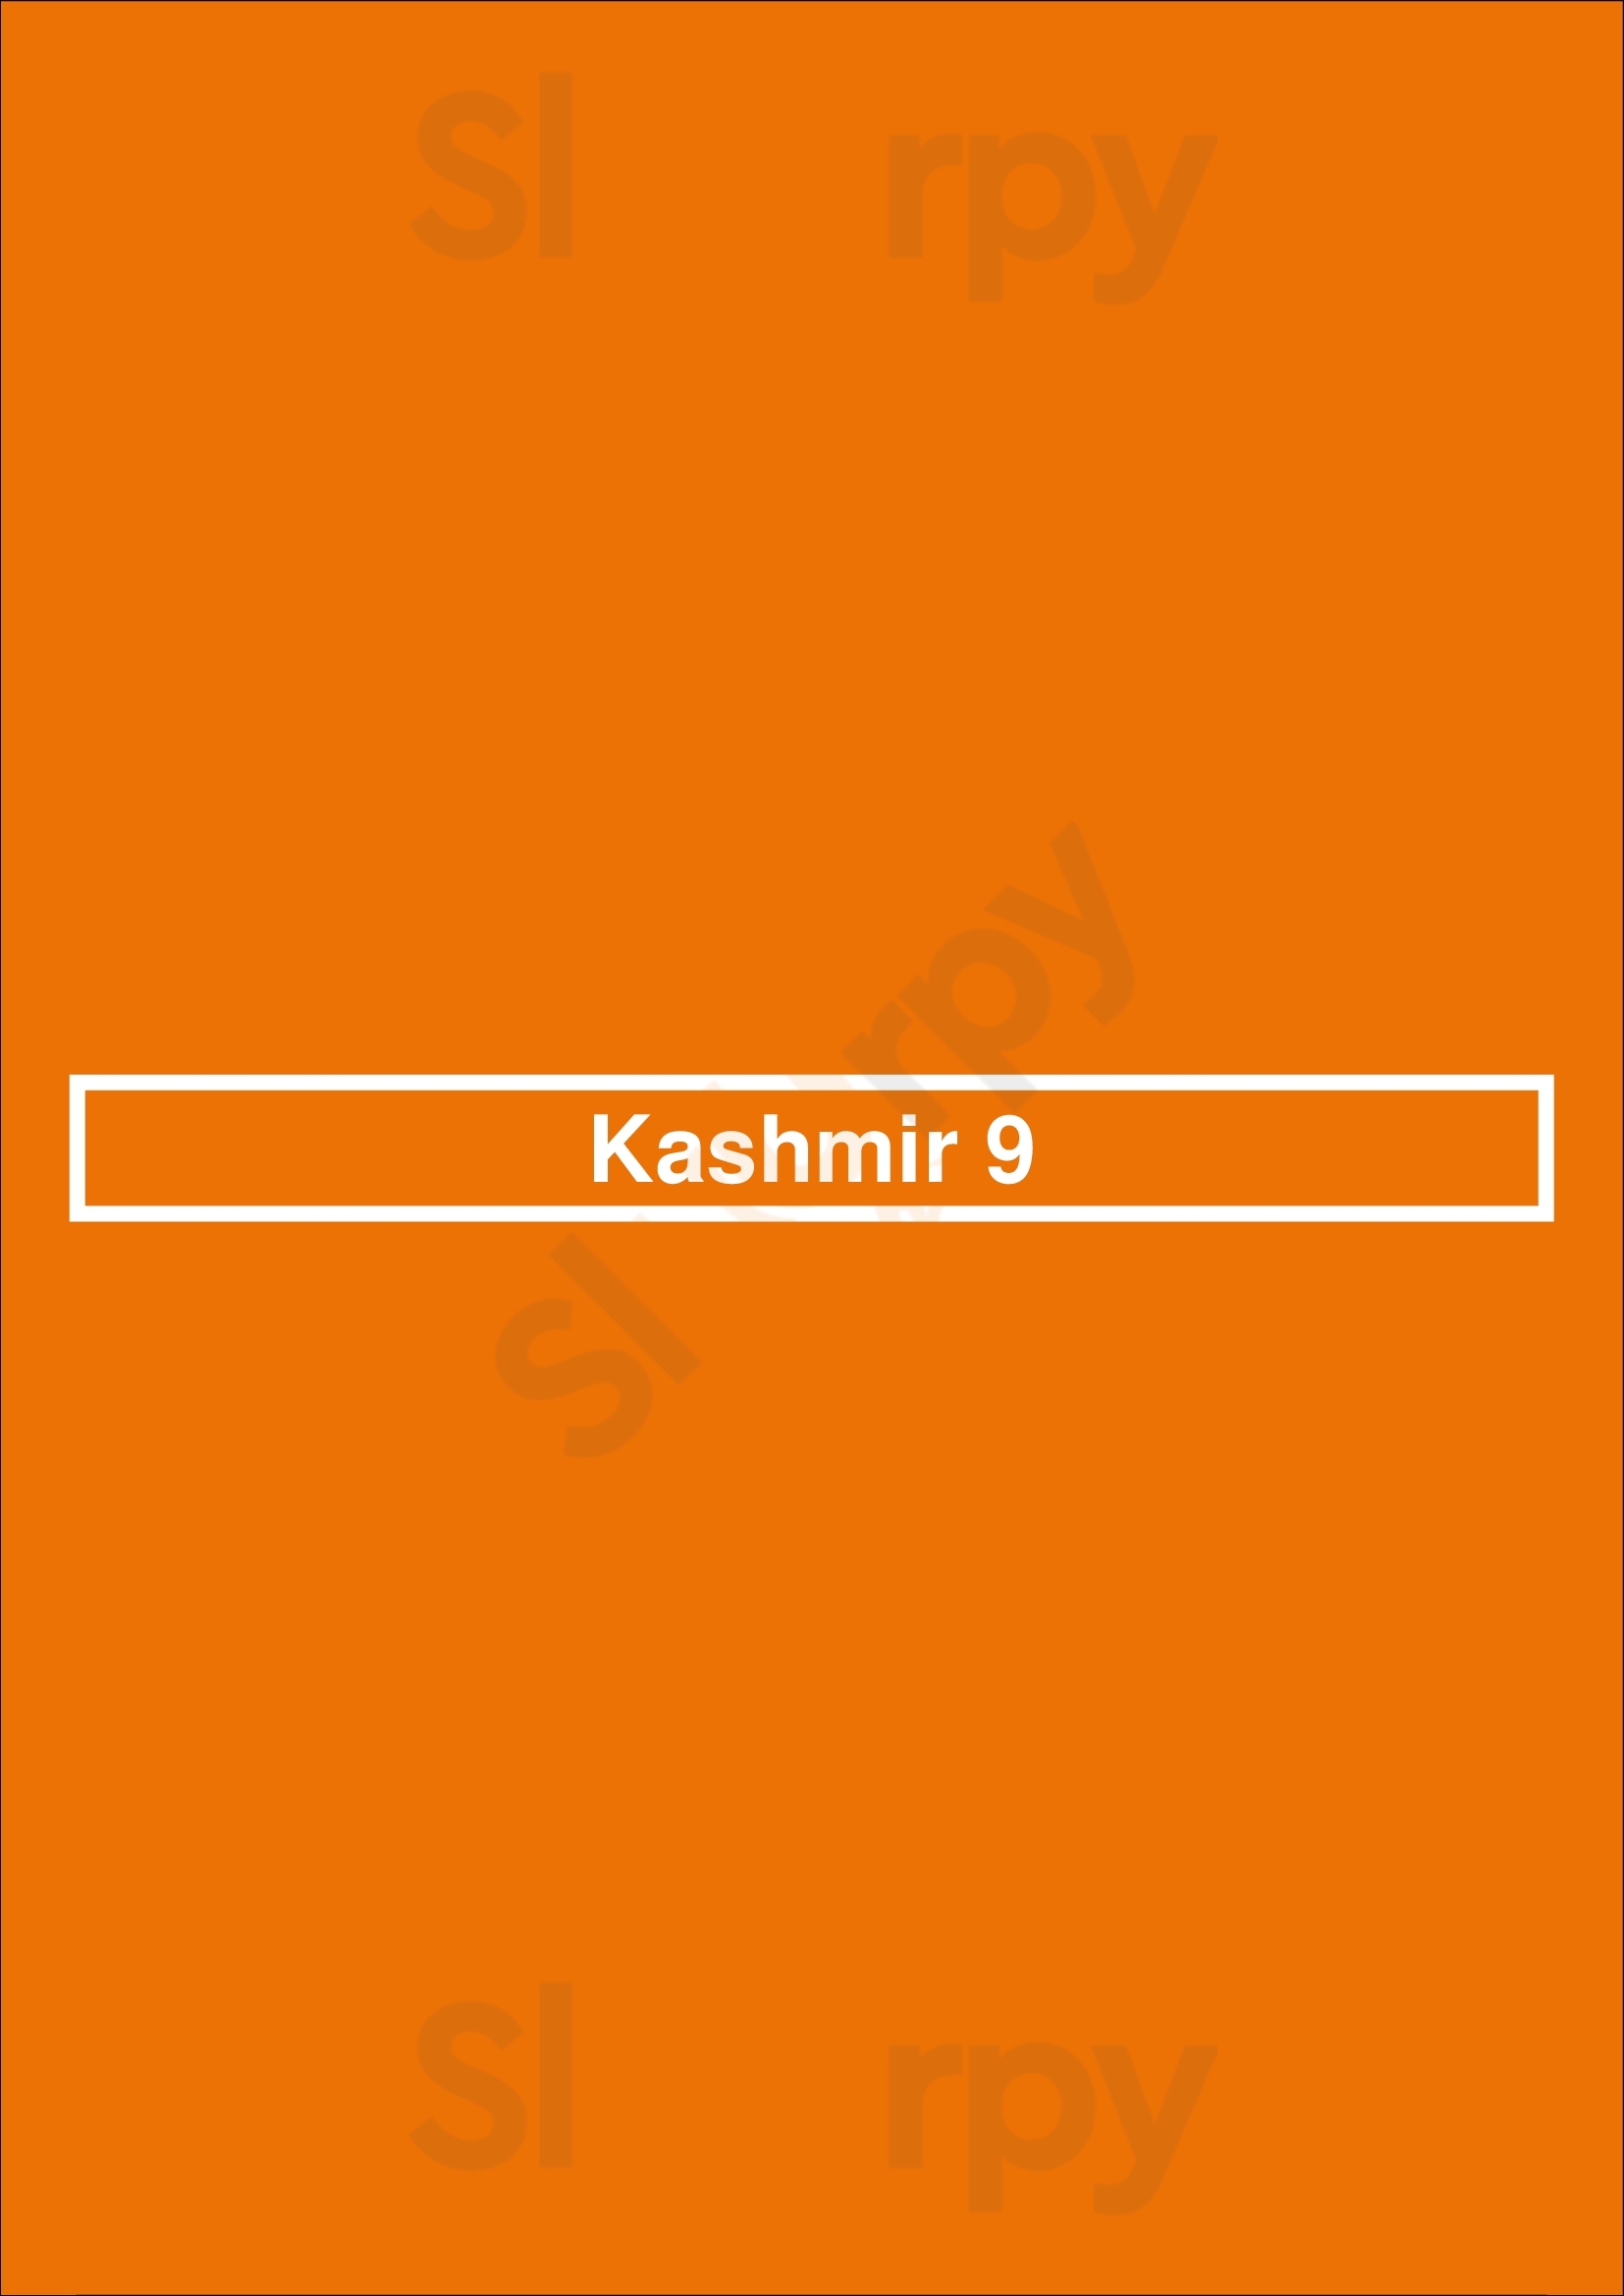 Kashmir 9 New York City Menu - 1